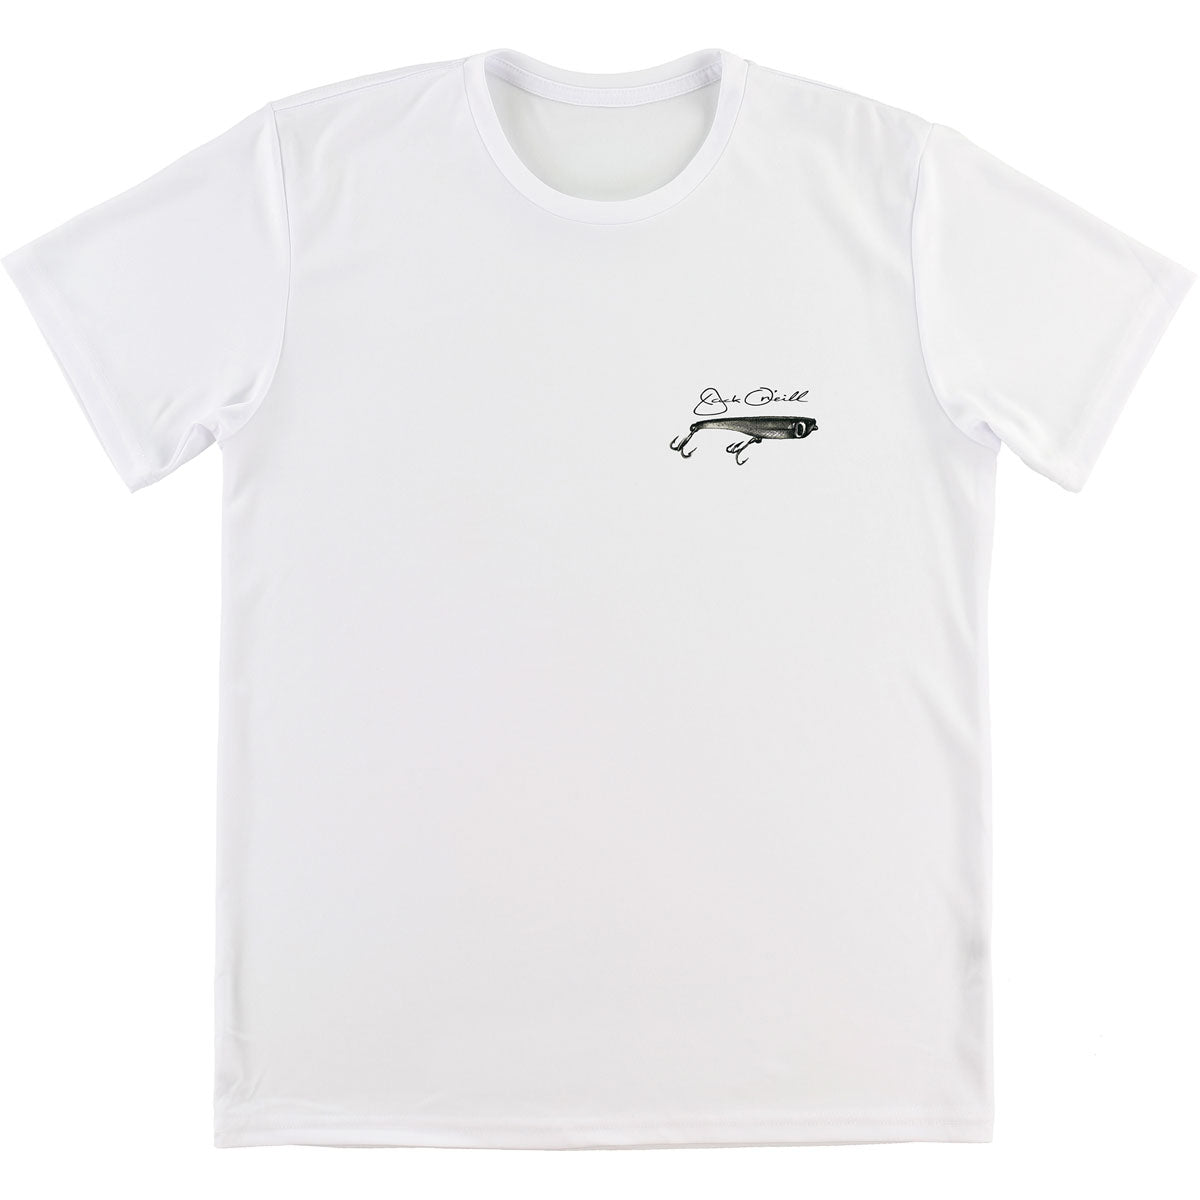 O'Neill Jack O'Neill Glider Men's Short-Sleeve Shirts - White